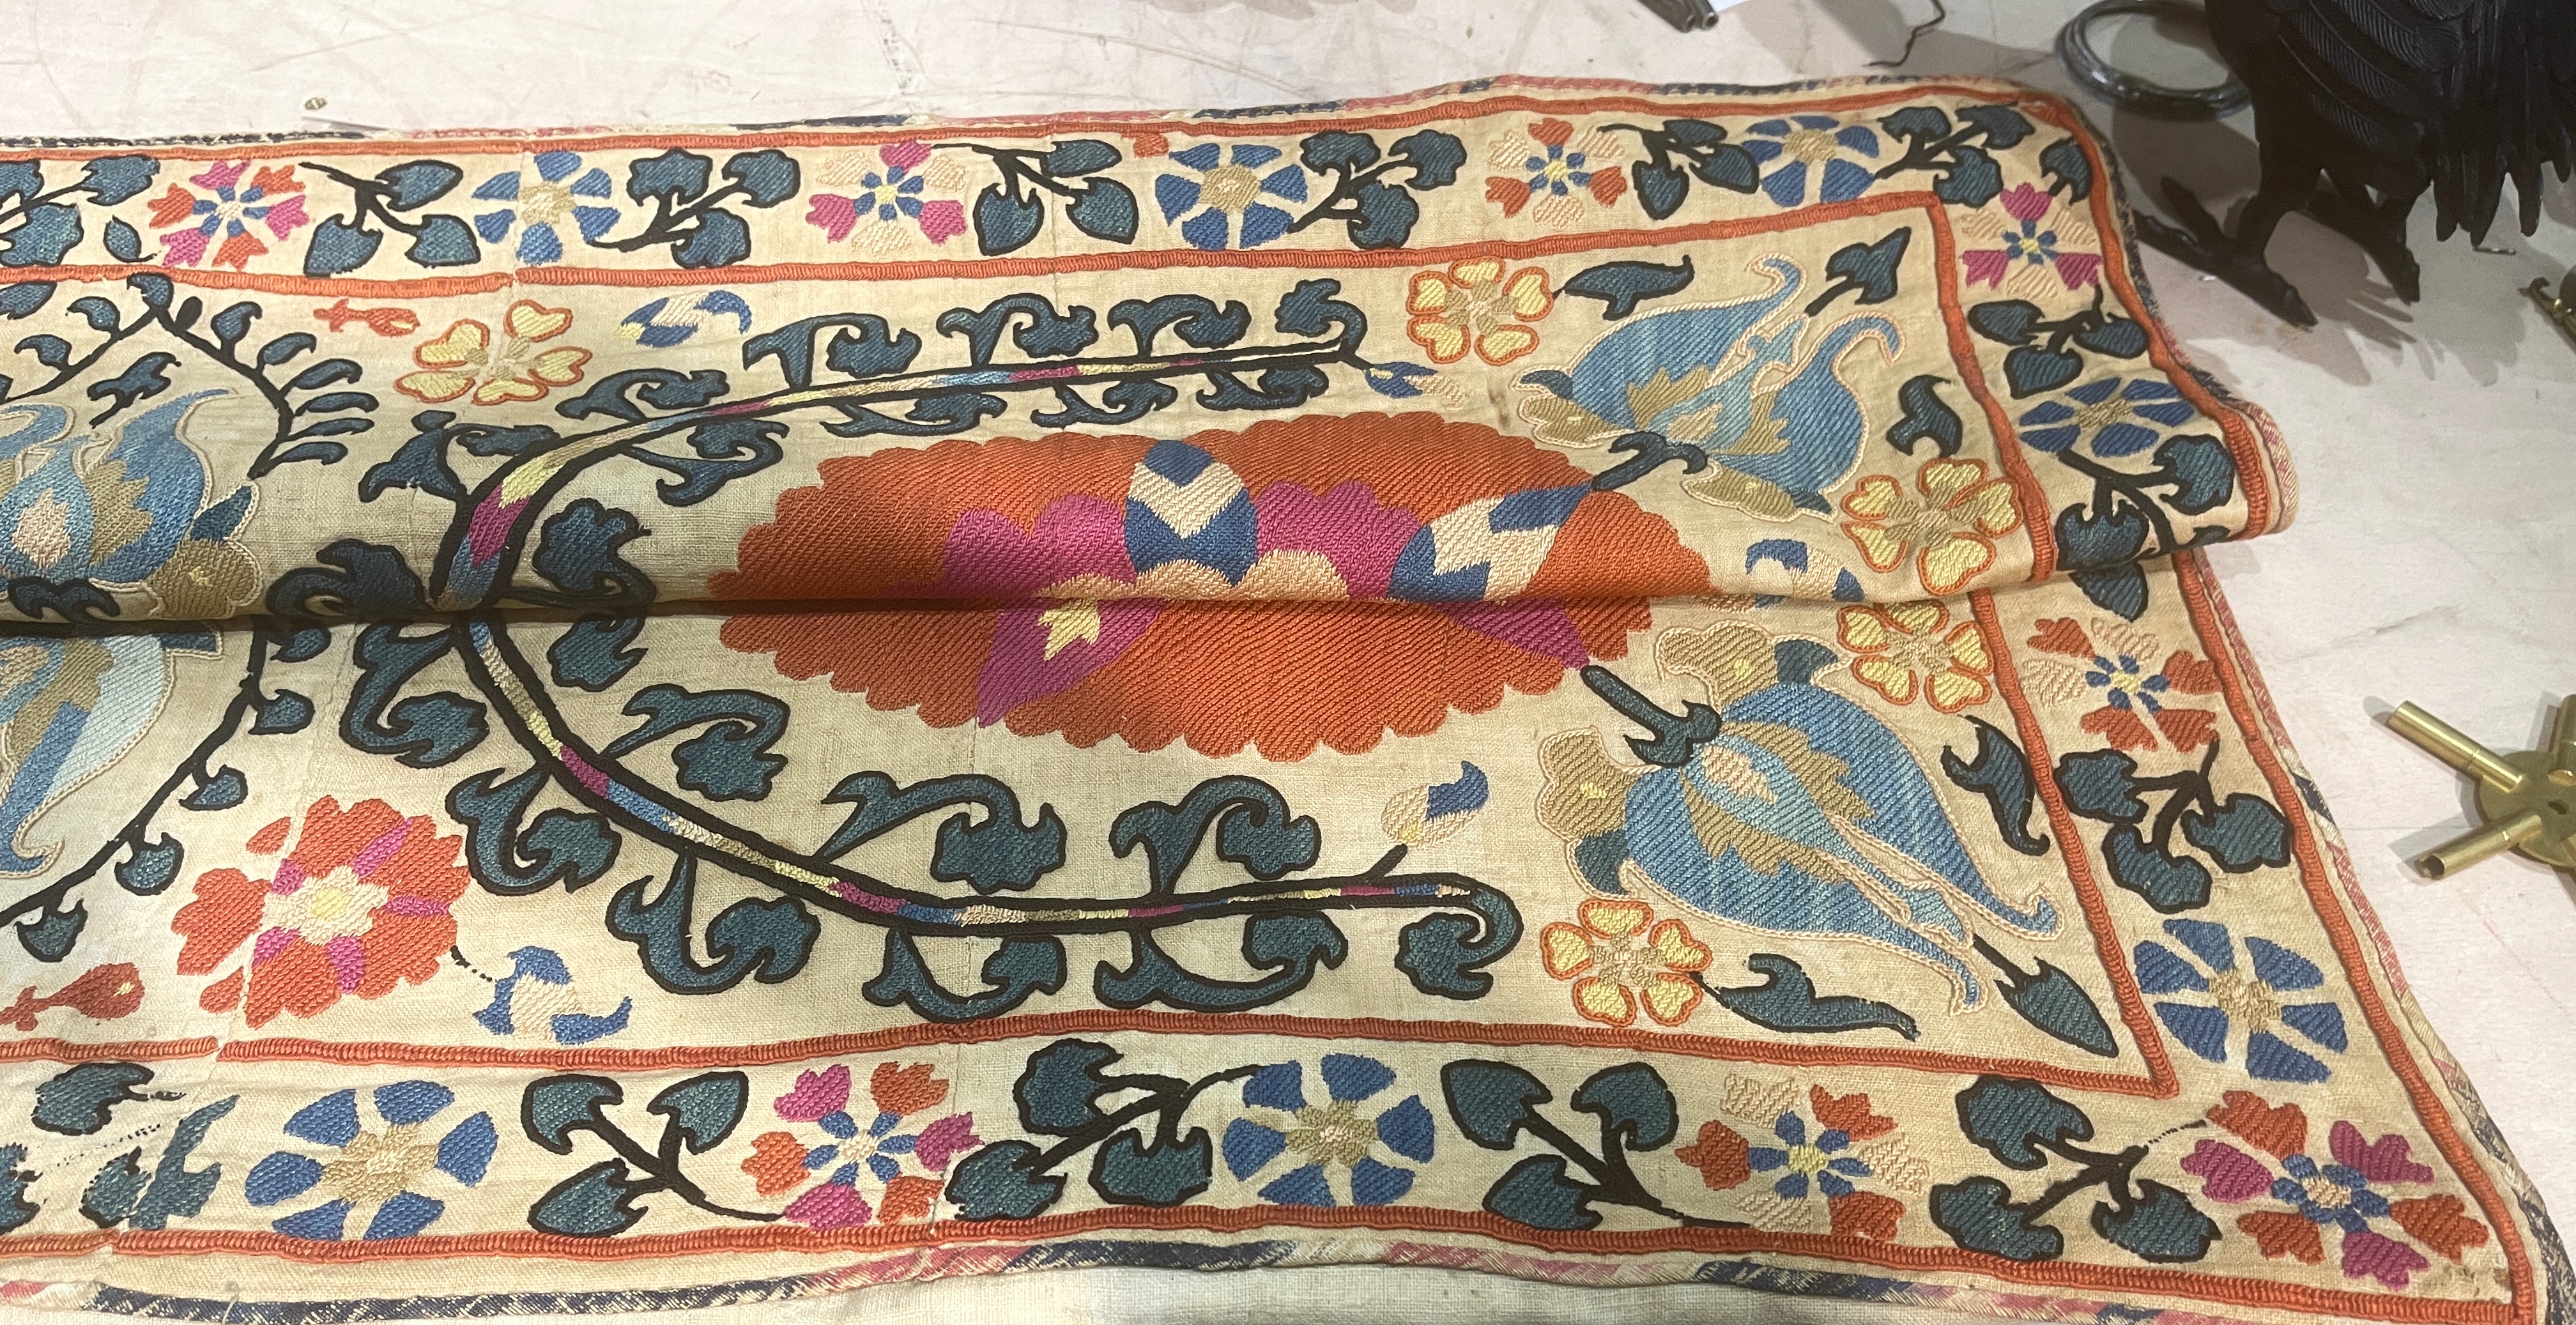 Antique Suzani Textile - Uzbekistan 19th C - 64.5 x 45 inches - Image 6 of 18